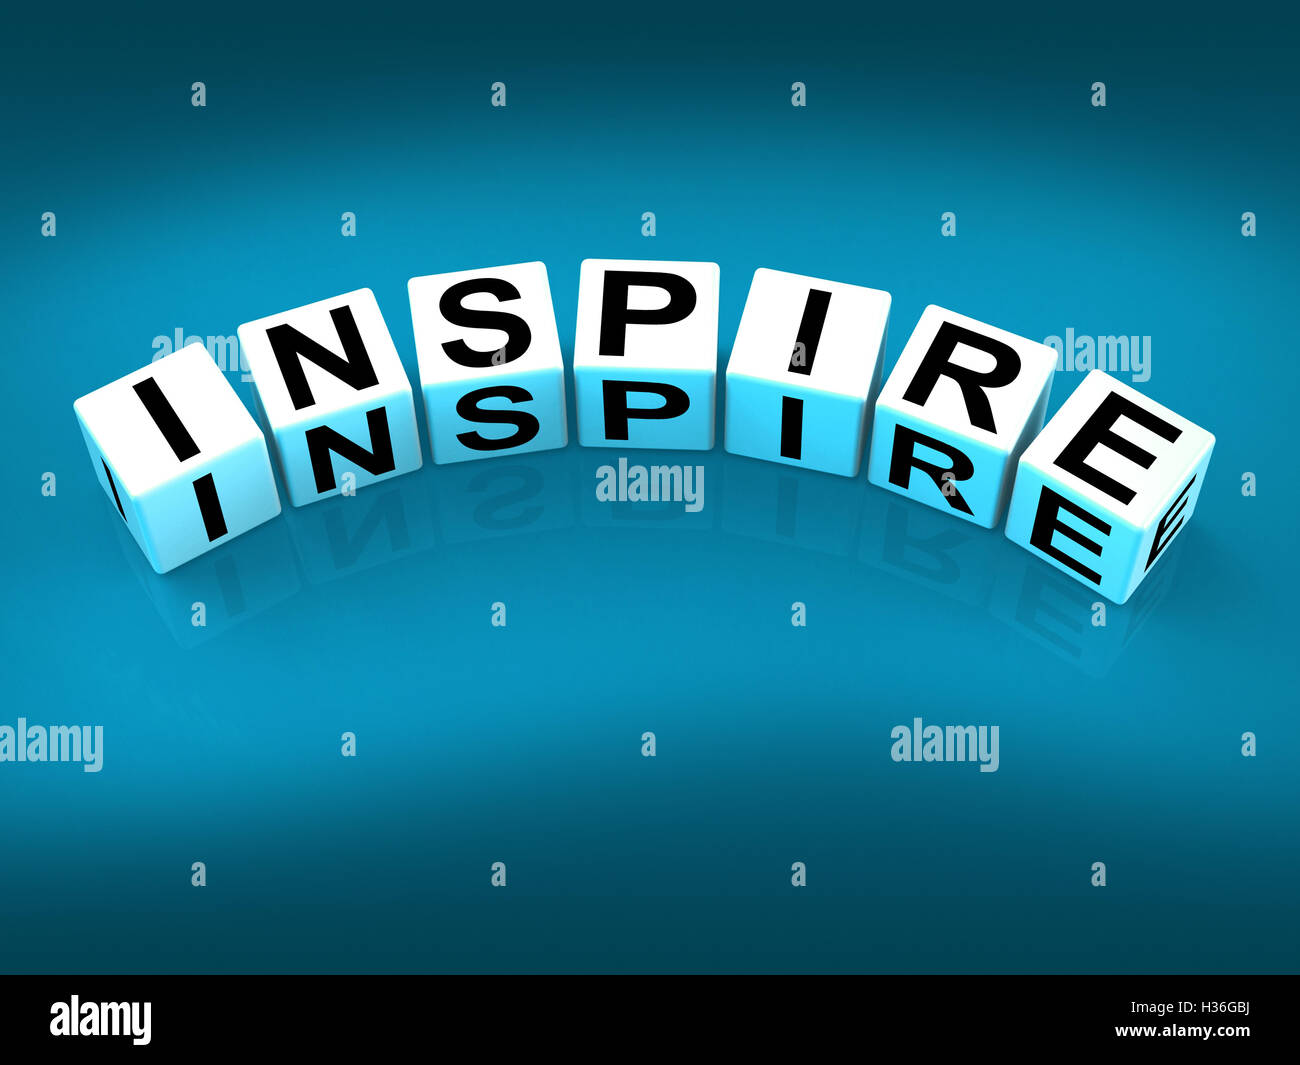 Inspire Blocks Show Inspiration Motivation and Invigoration Stock Photo